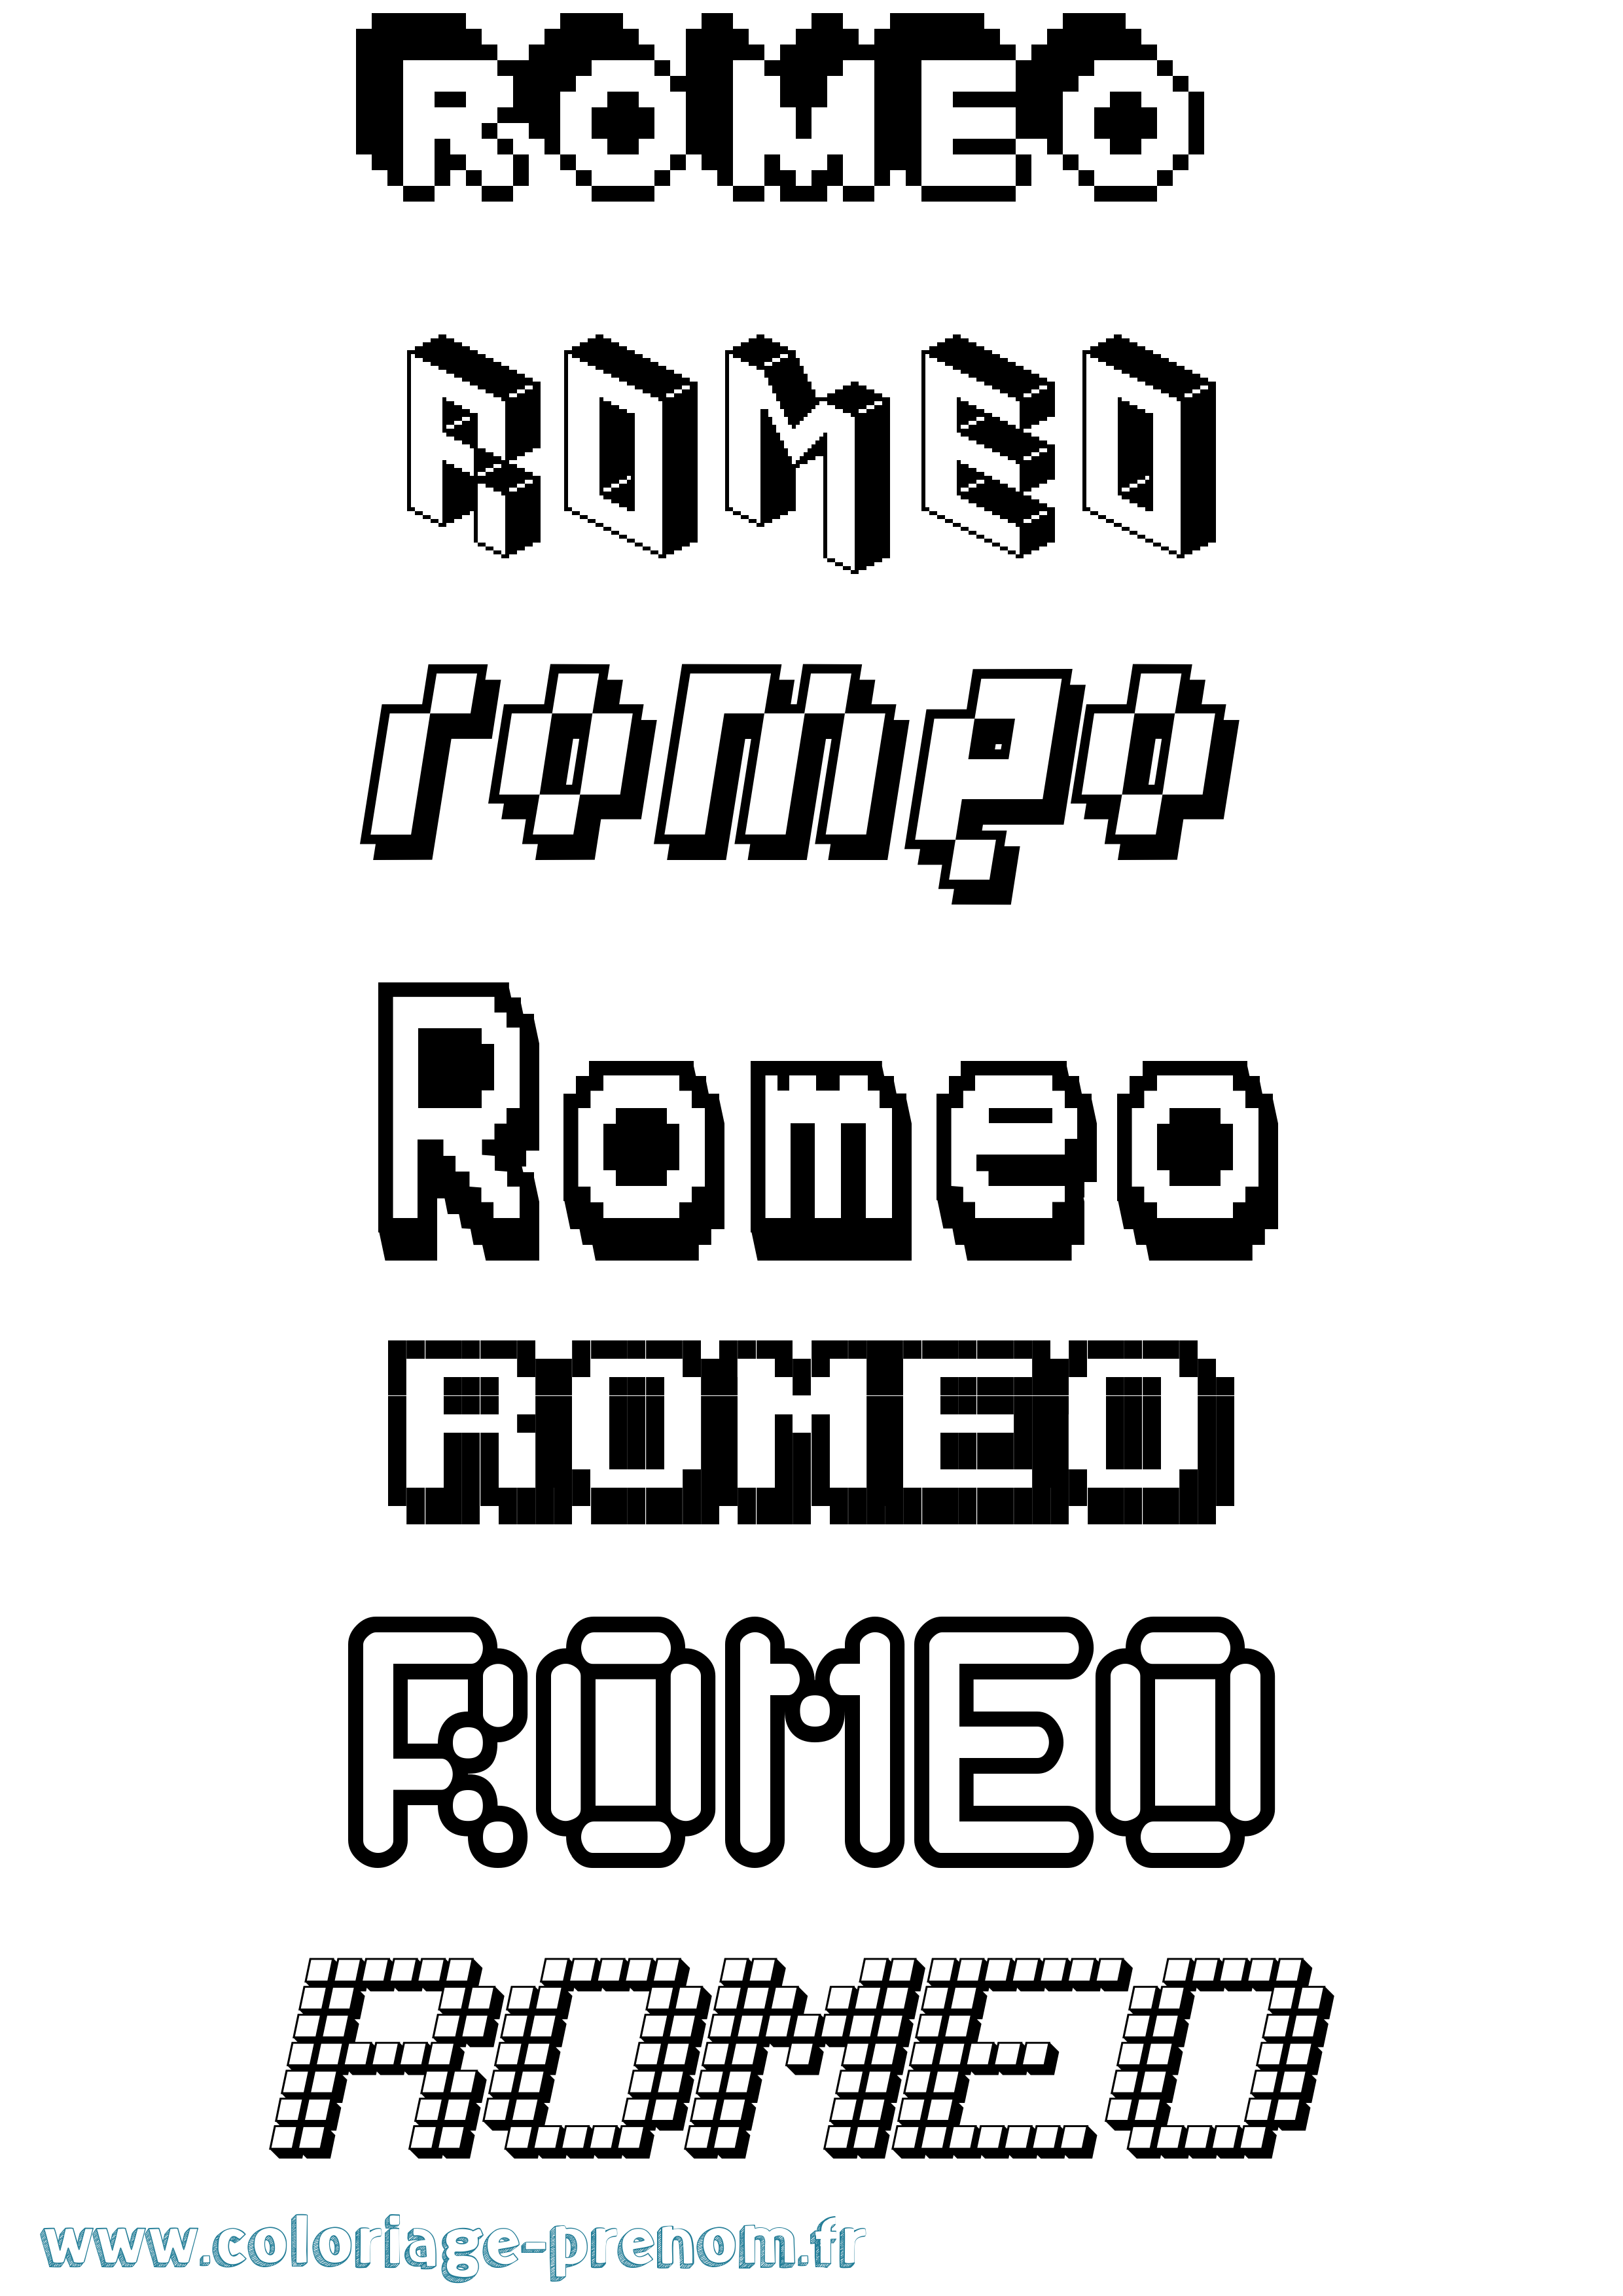 Coloriage prénom Romeo Pixel